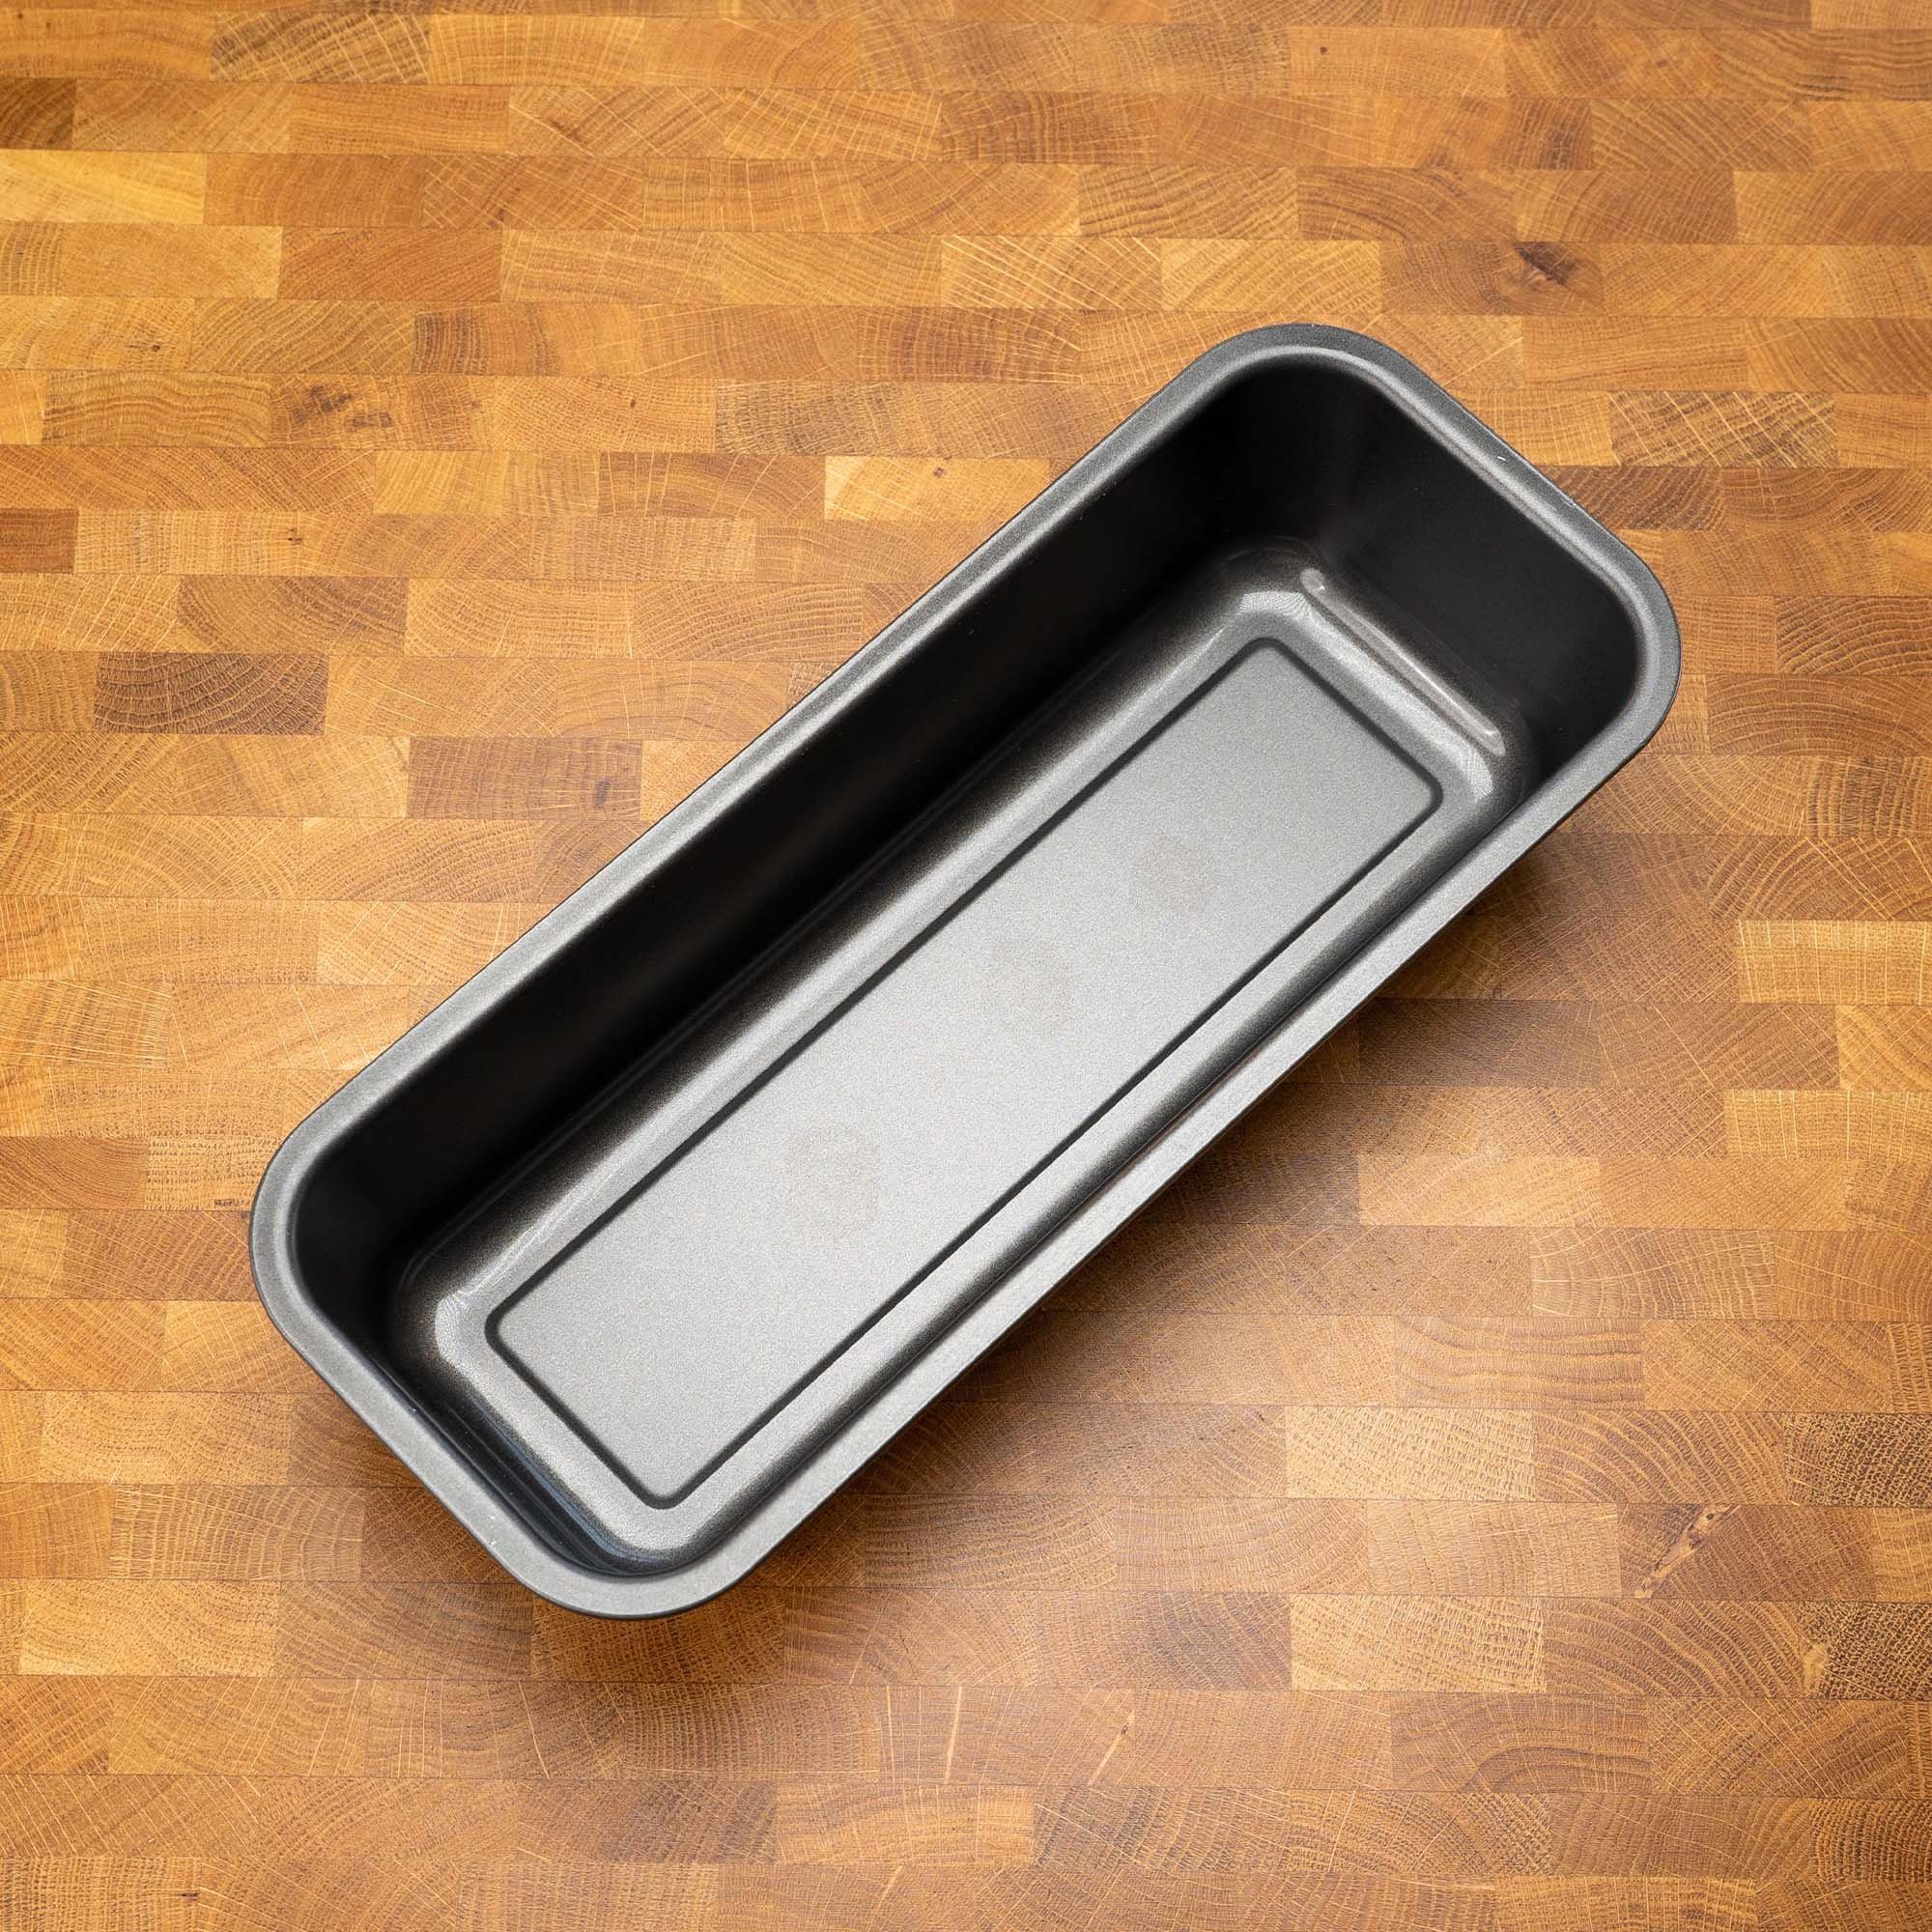 Mixcover Küchenmaschinen-Adapter Kastenform Königskuchenform Brotbackform Kuchenform mit Antihaftbeschichtung 32 cm